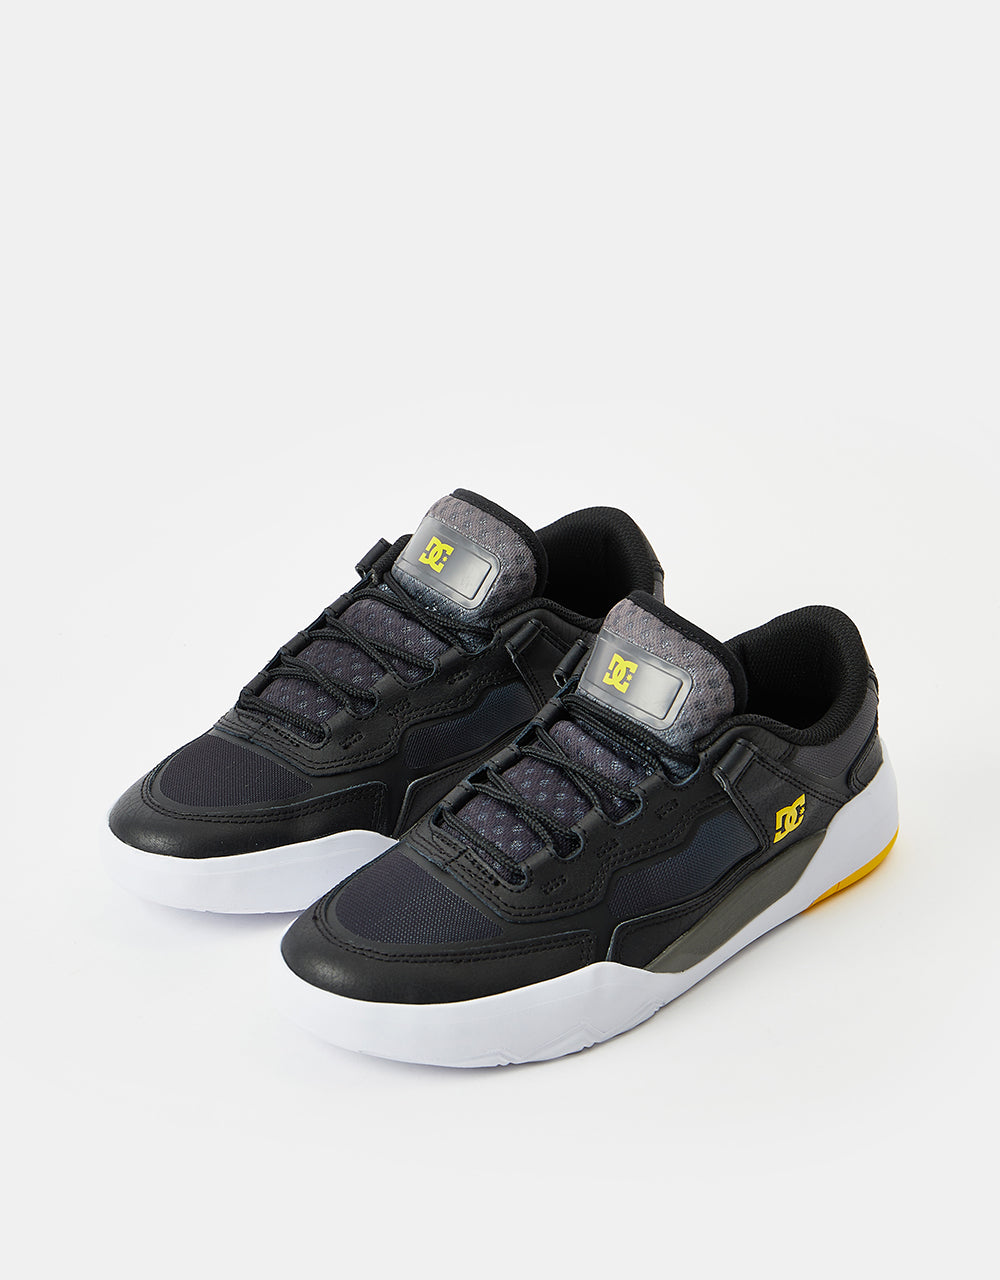 DC Metric Skate Shoes - Black/Grey/Yellow